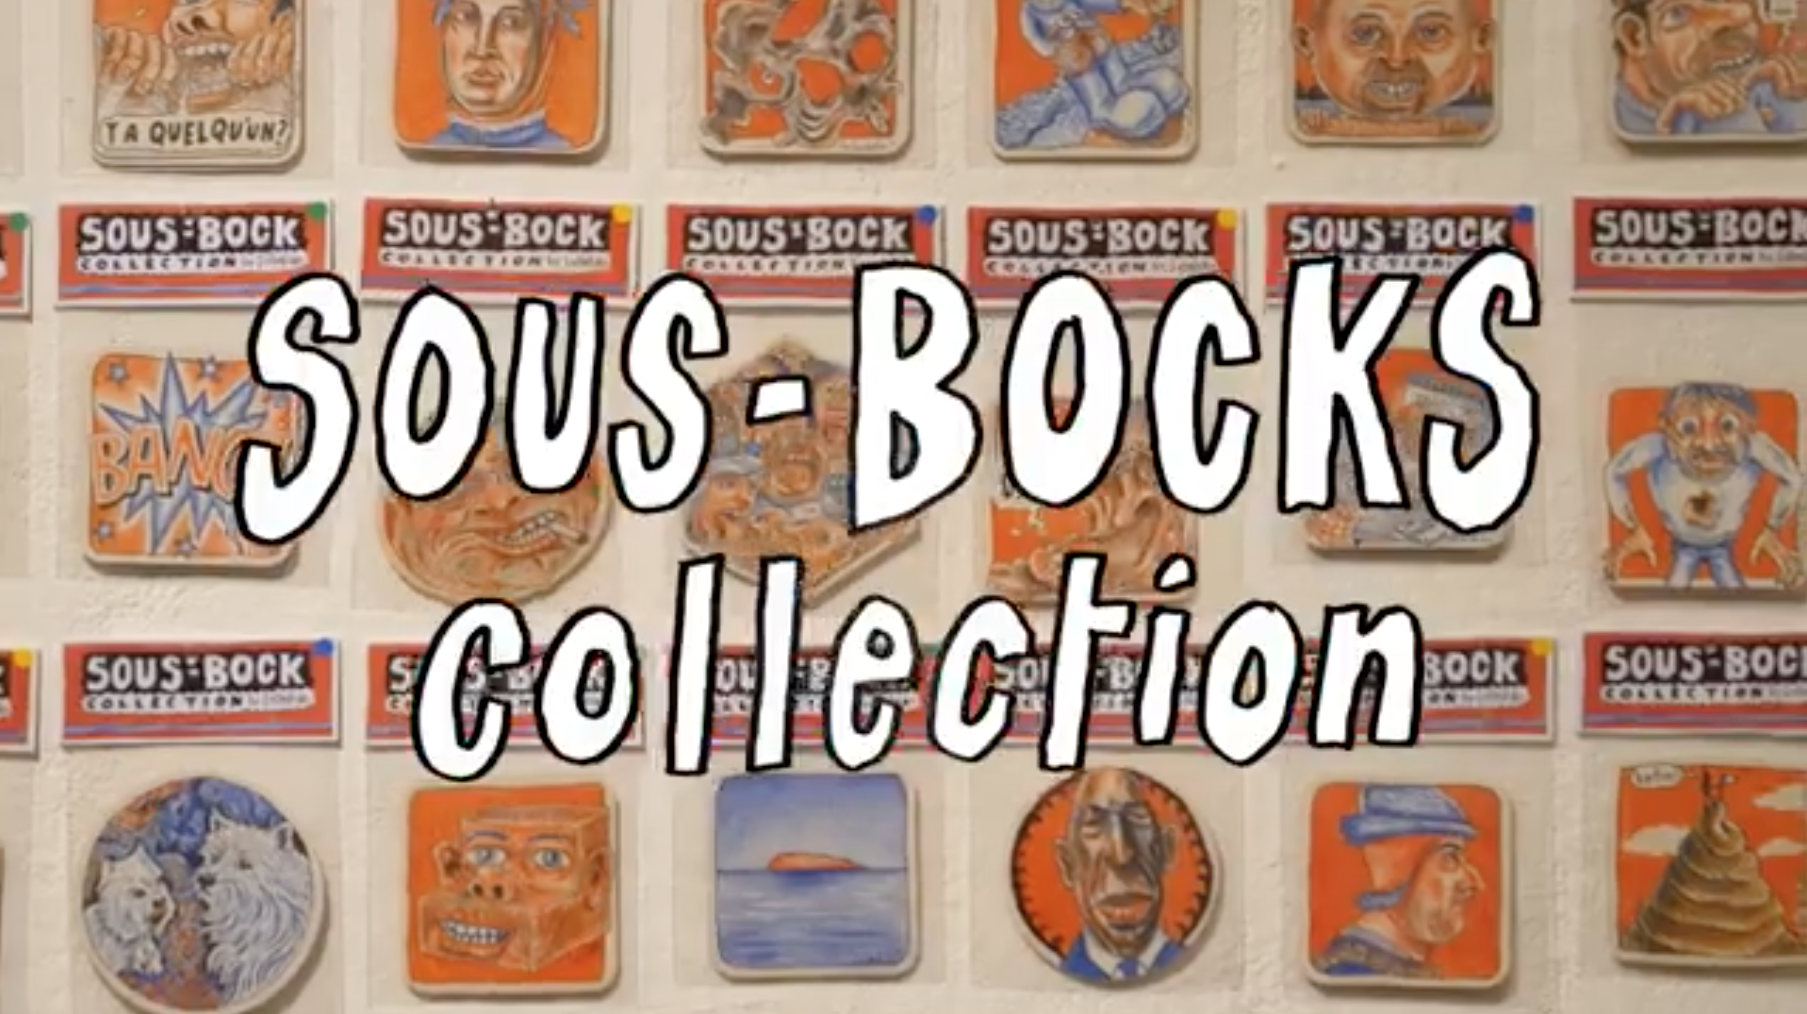 Mu Blondeau Sous-bocks collection